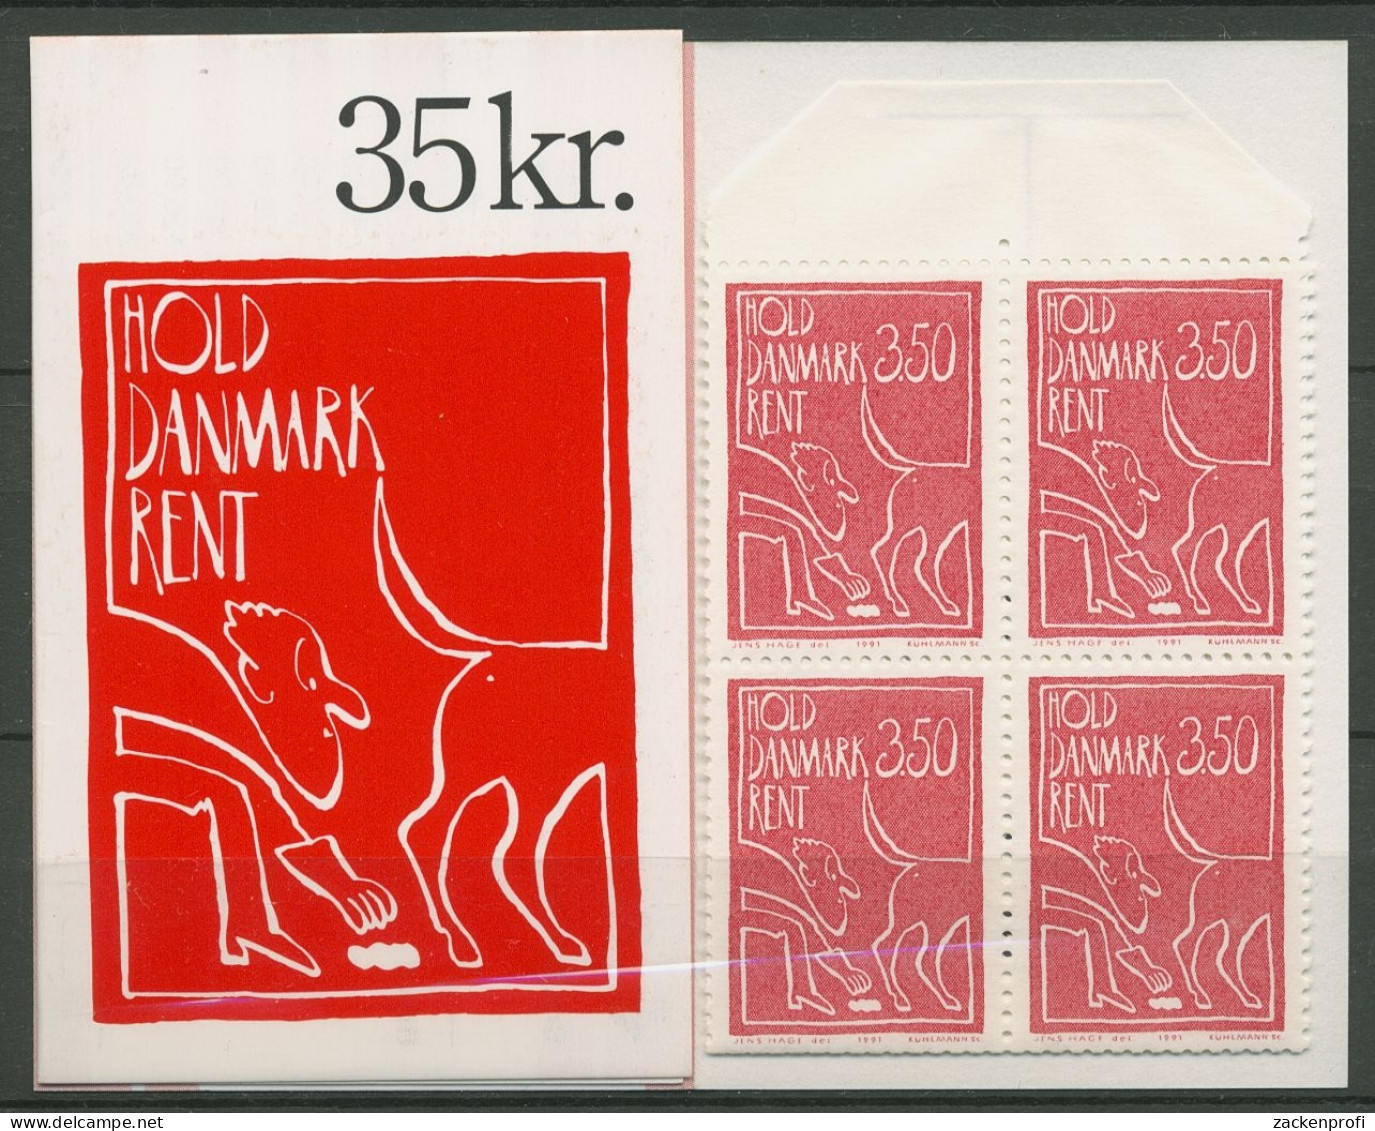 Dänemark 1991 Sauberes Dänemark Markenheftchen 1010 MH Postfrisch (C93041) - Carnets